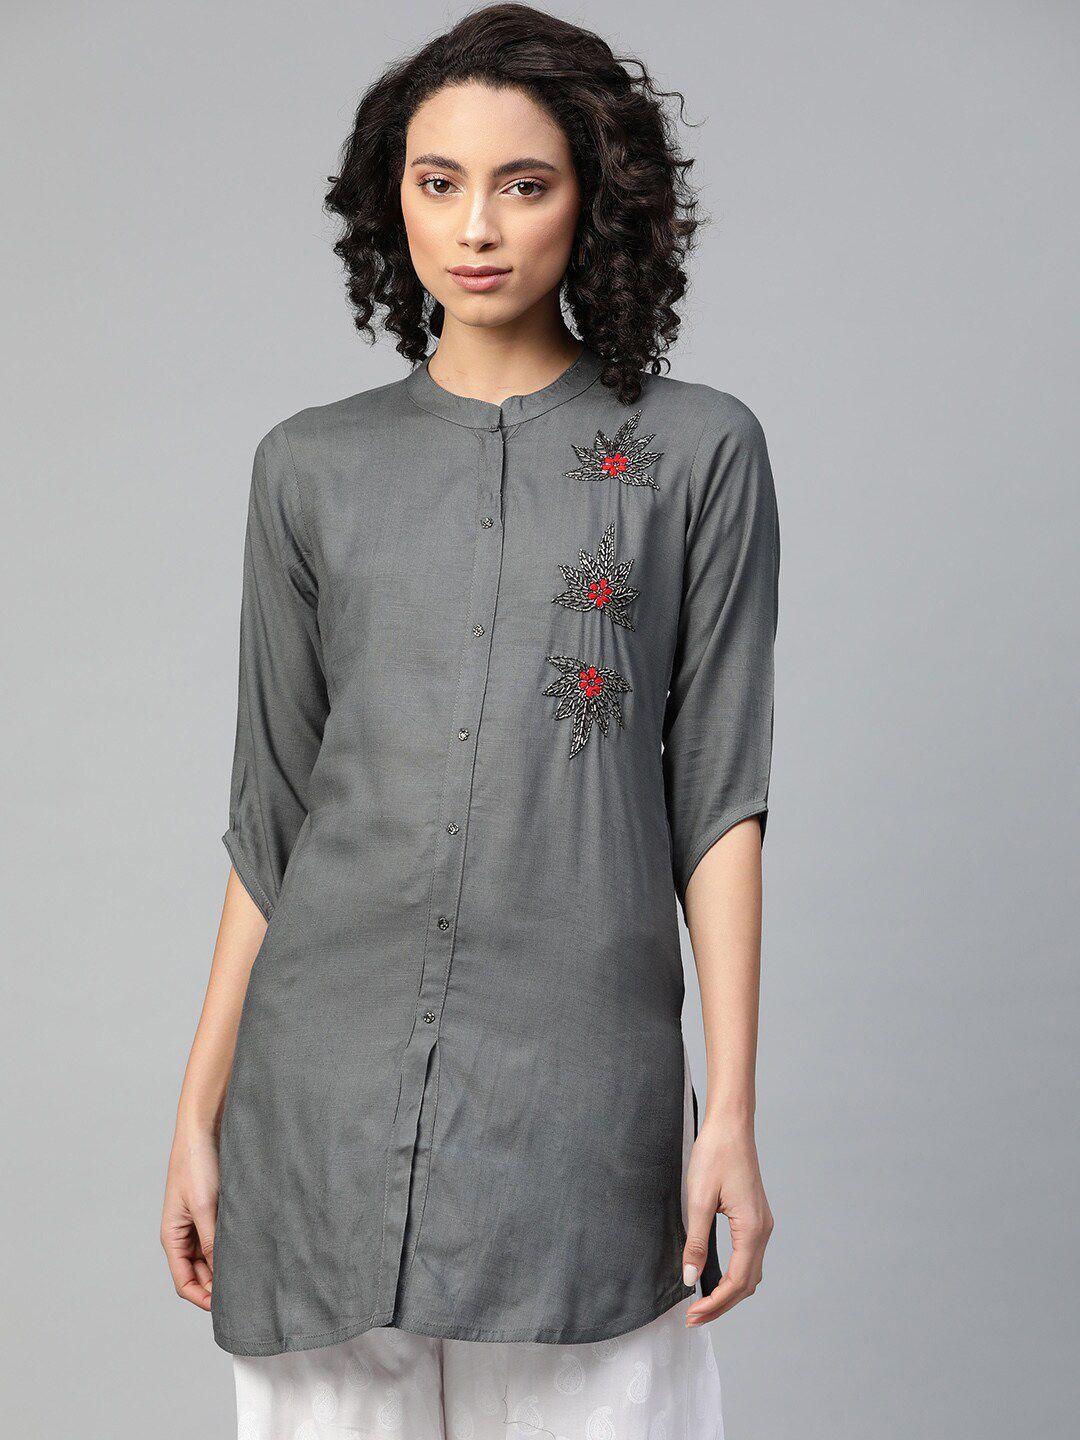 jc4u floral embroidered mandarin collar shirt style longline top